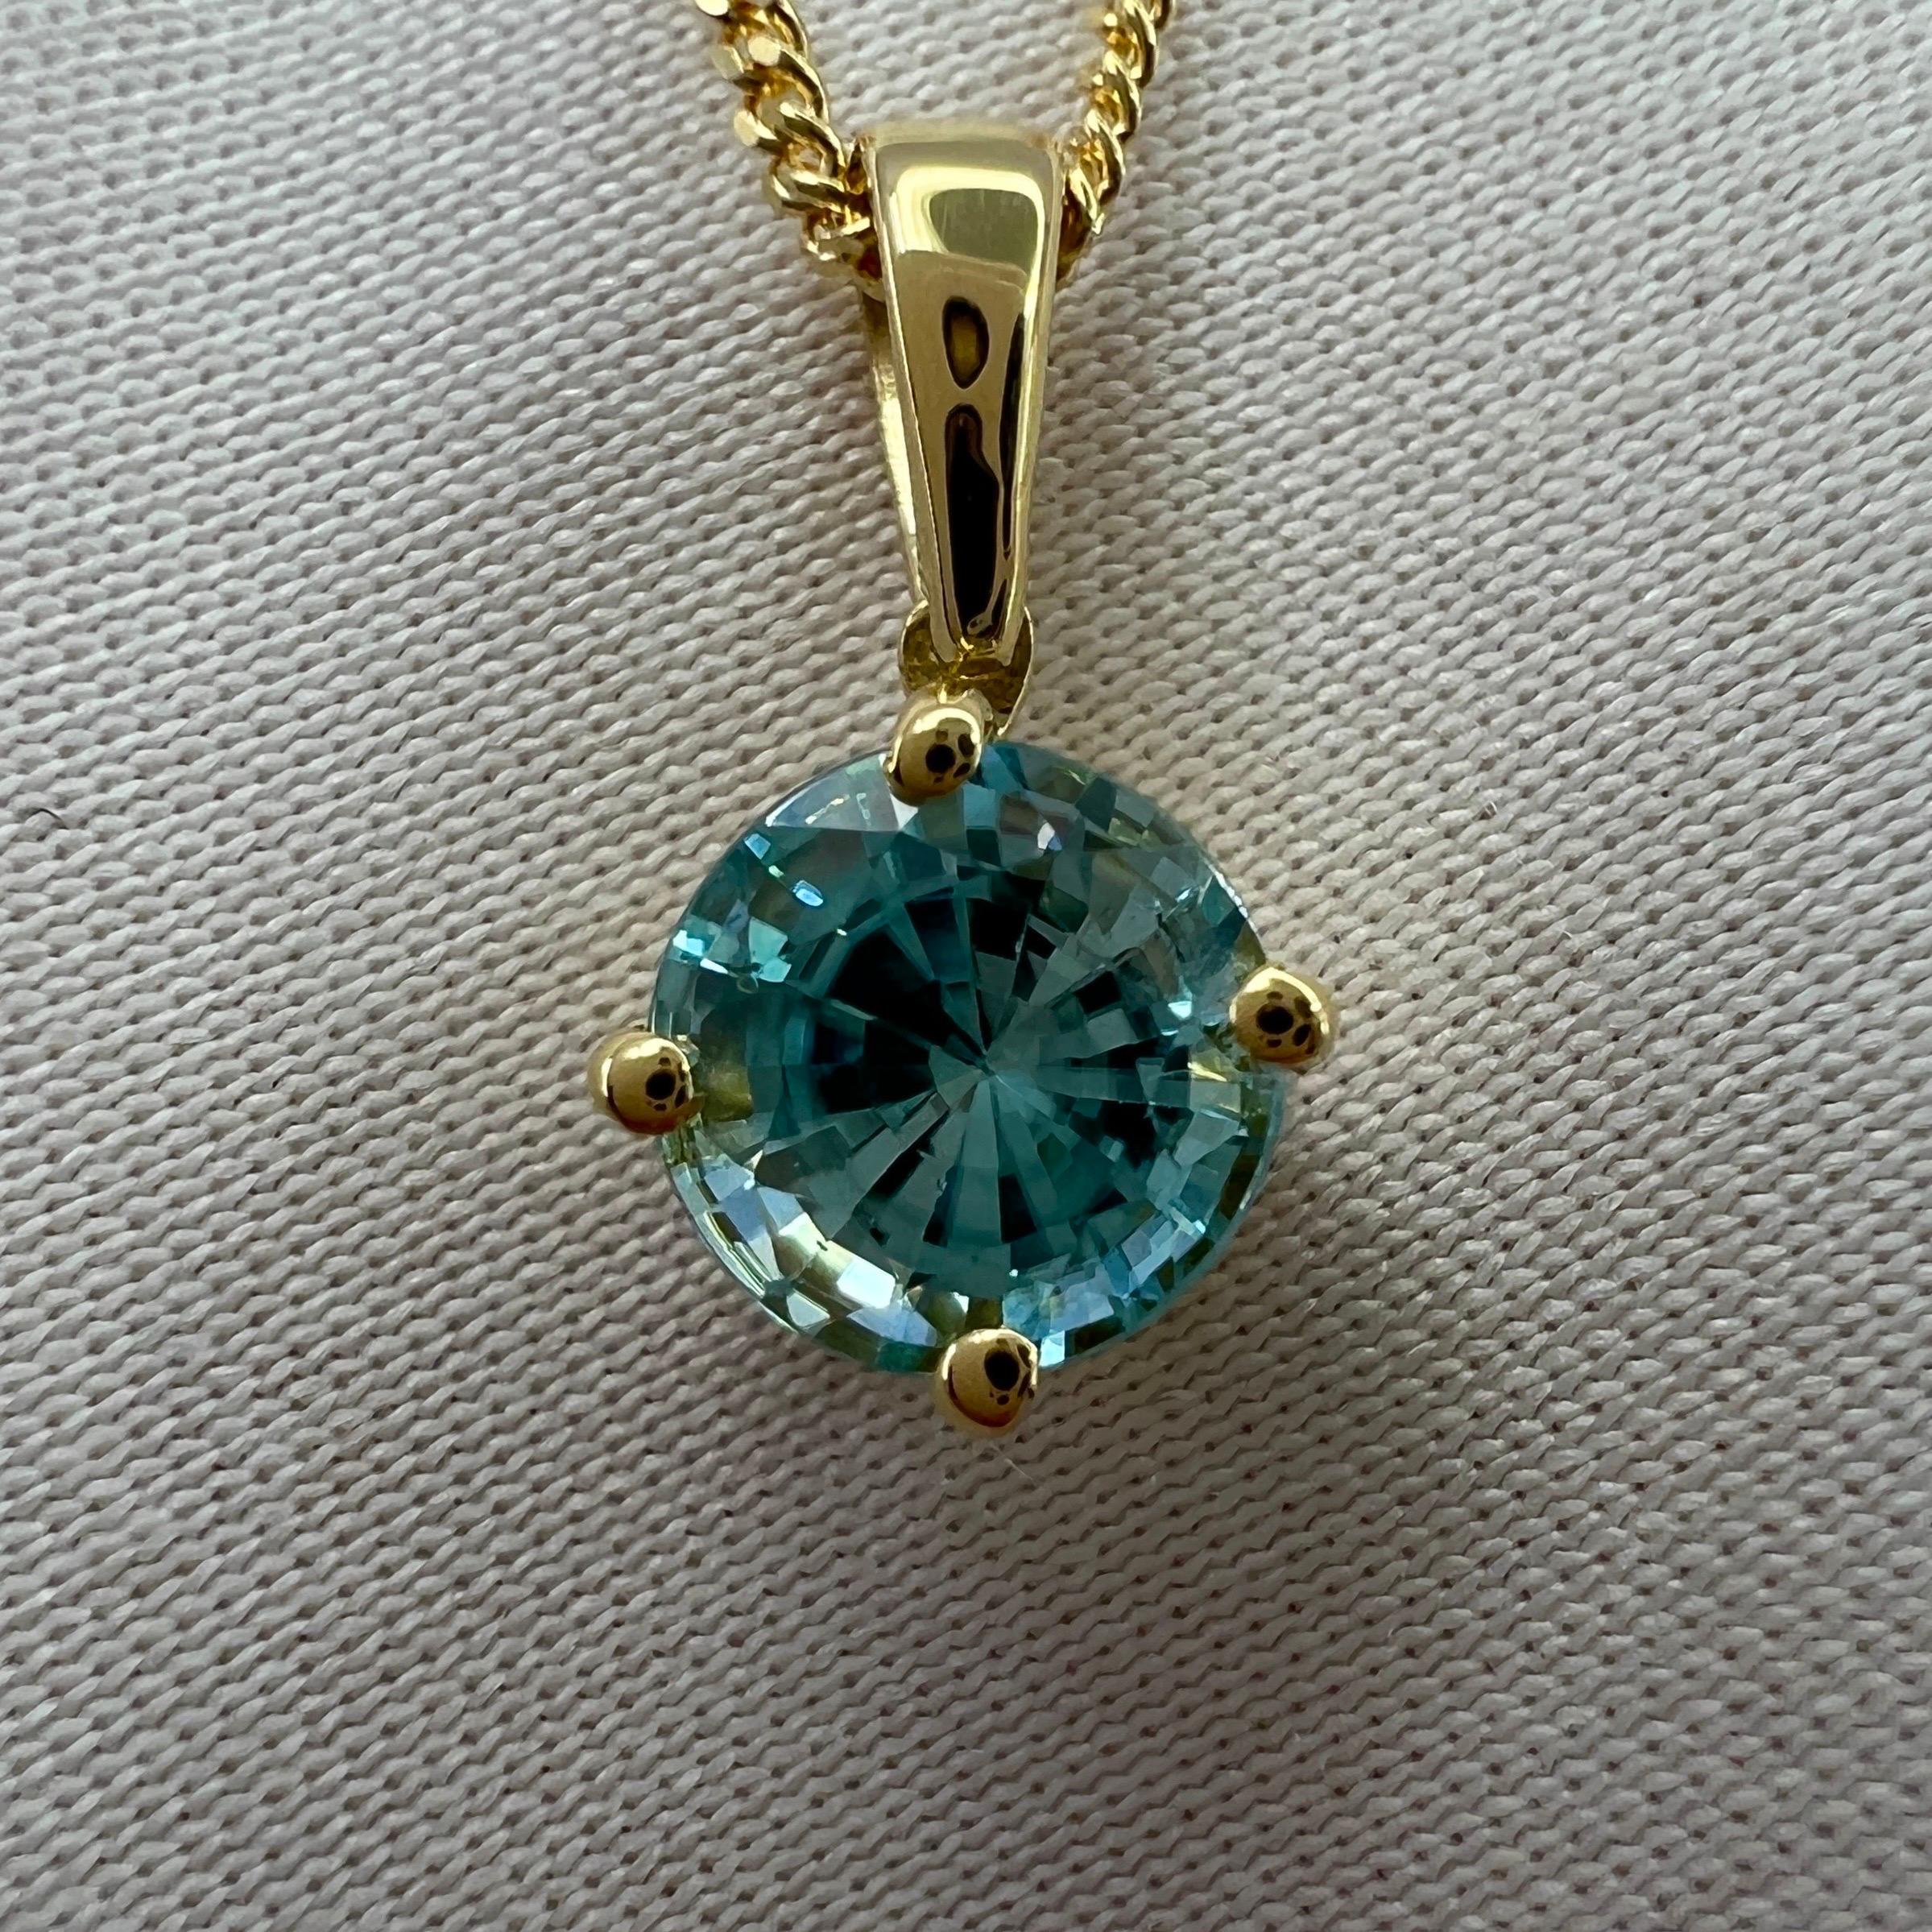 Vivid Neon Blue Zircon 1.20 Carat Round Cut 18k Yellow Gold Pendant Necklace For Sale 4